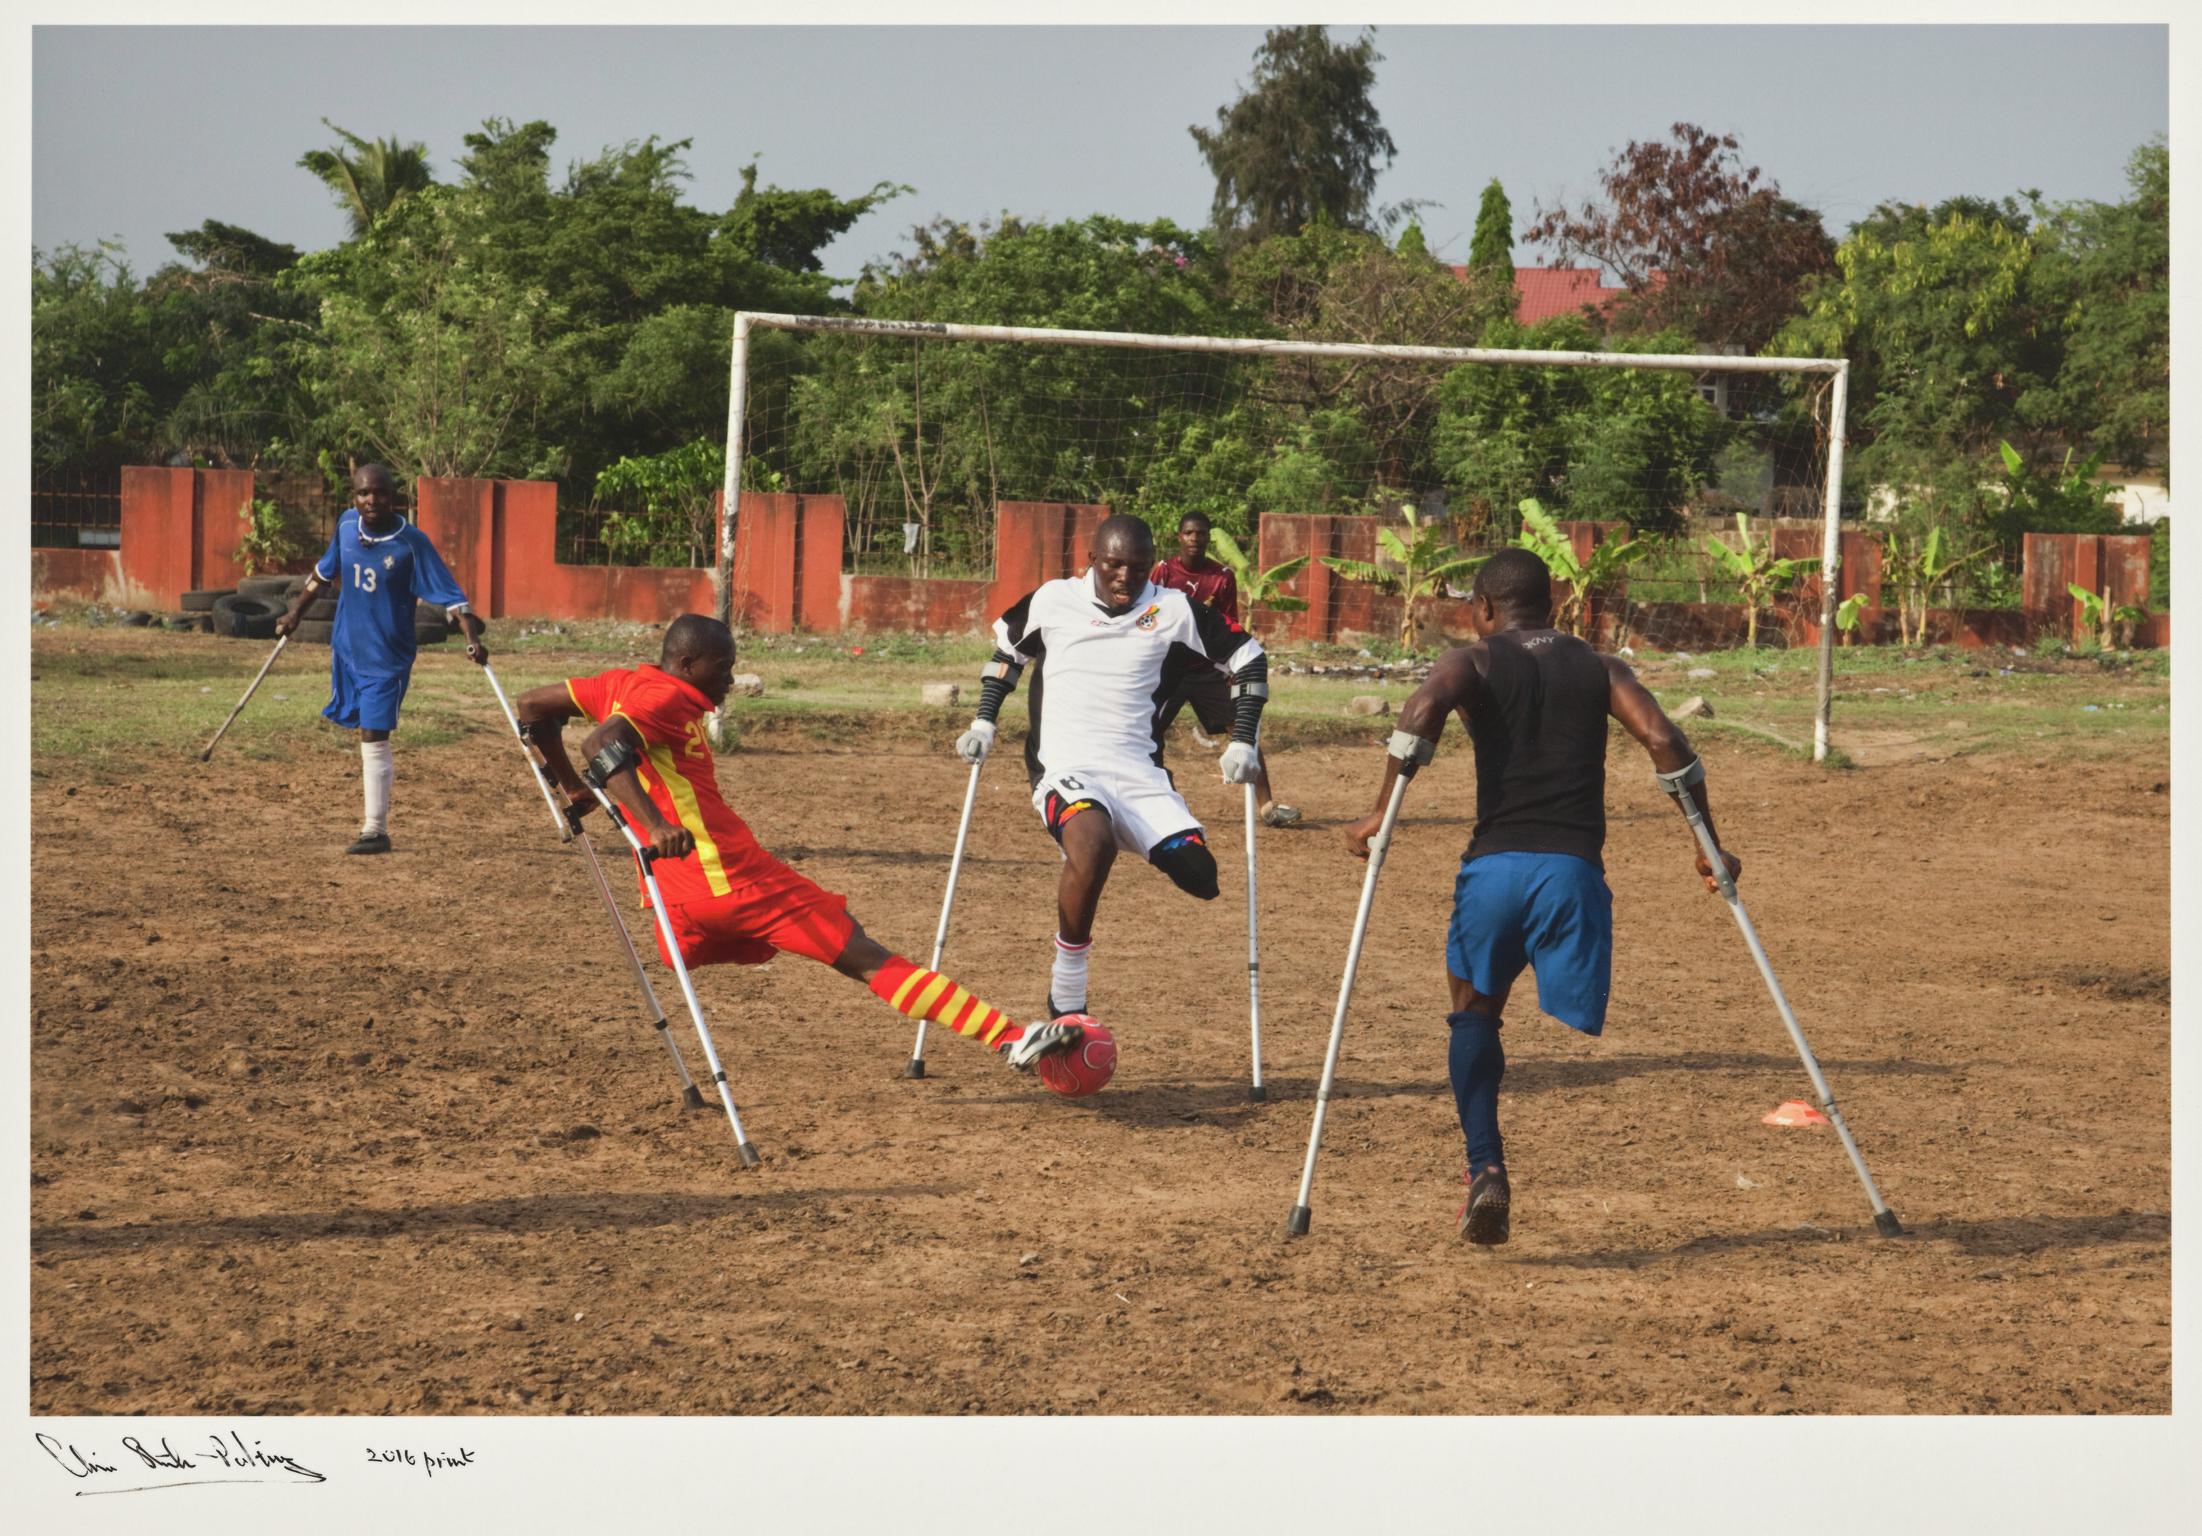 Ymarfer tîm pêl-droed Black Challenge Disabled – Accara, Ghana